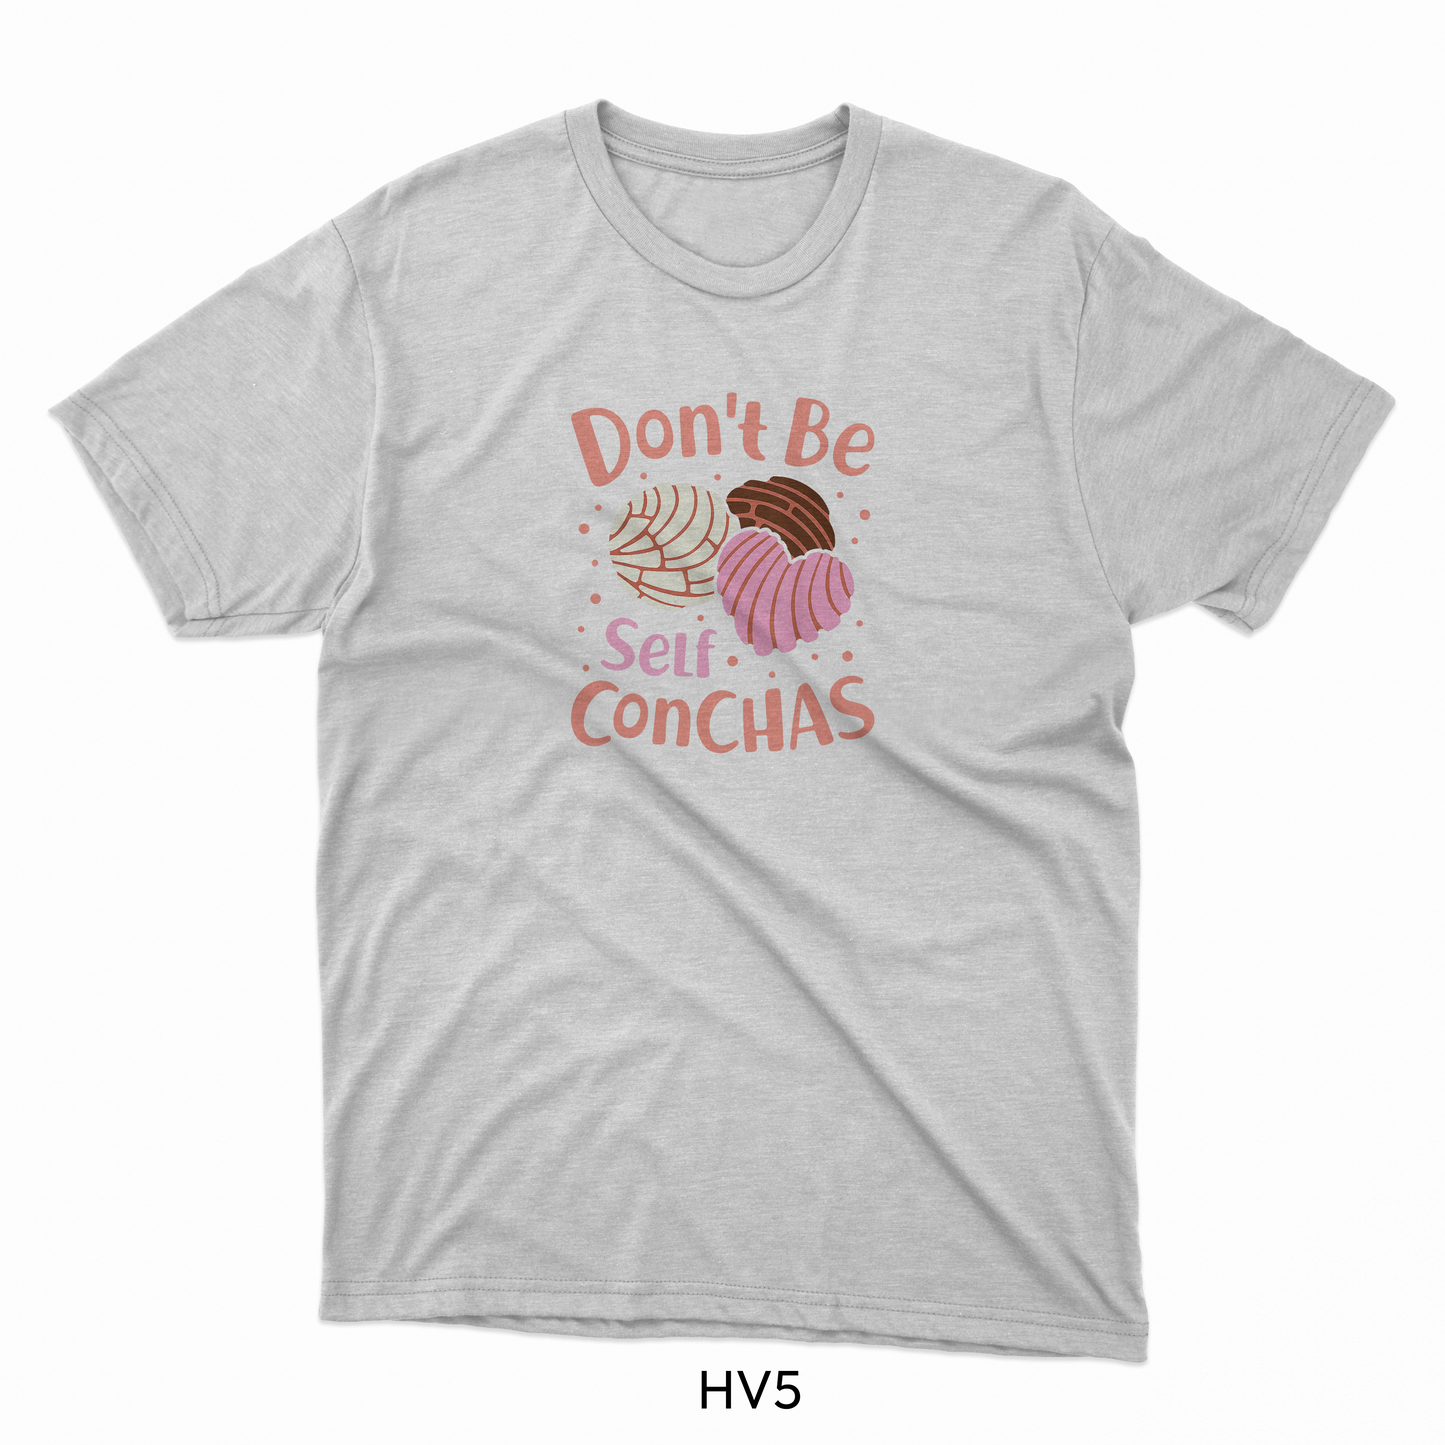 Don't Be Self-Conchas Logo (HV5)